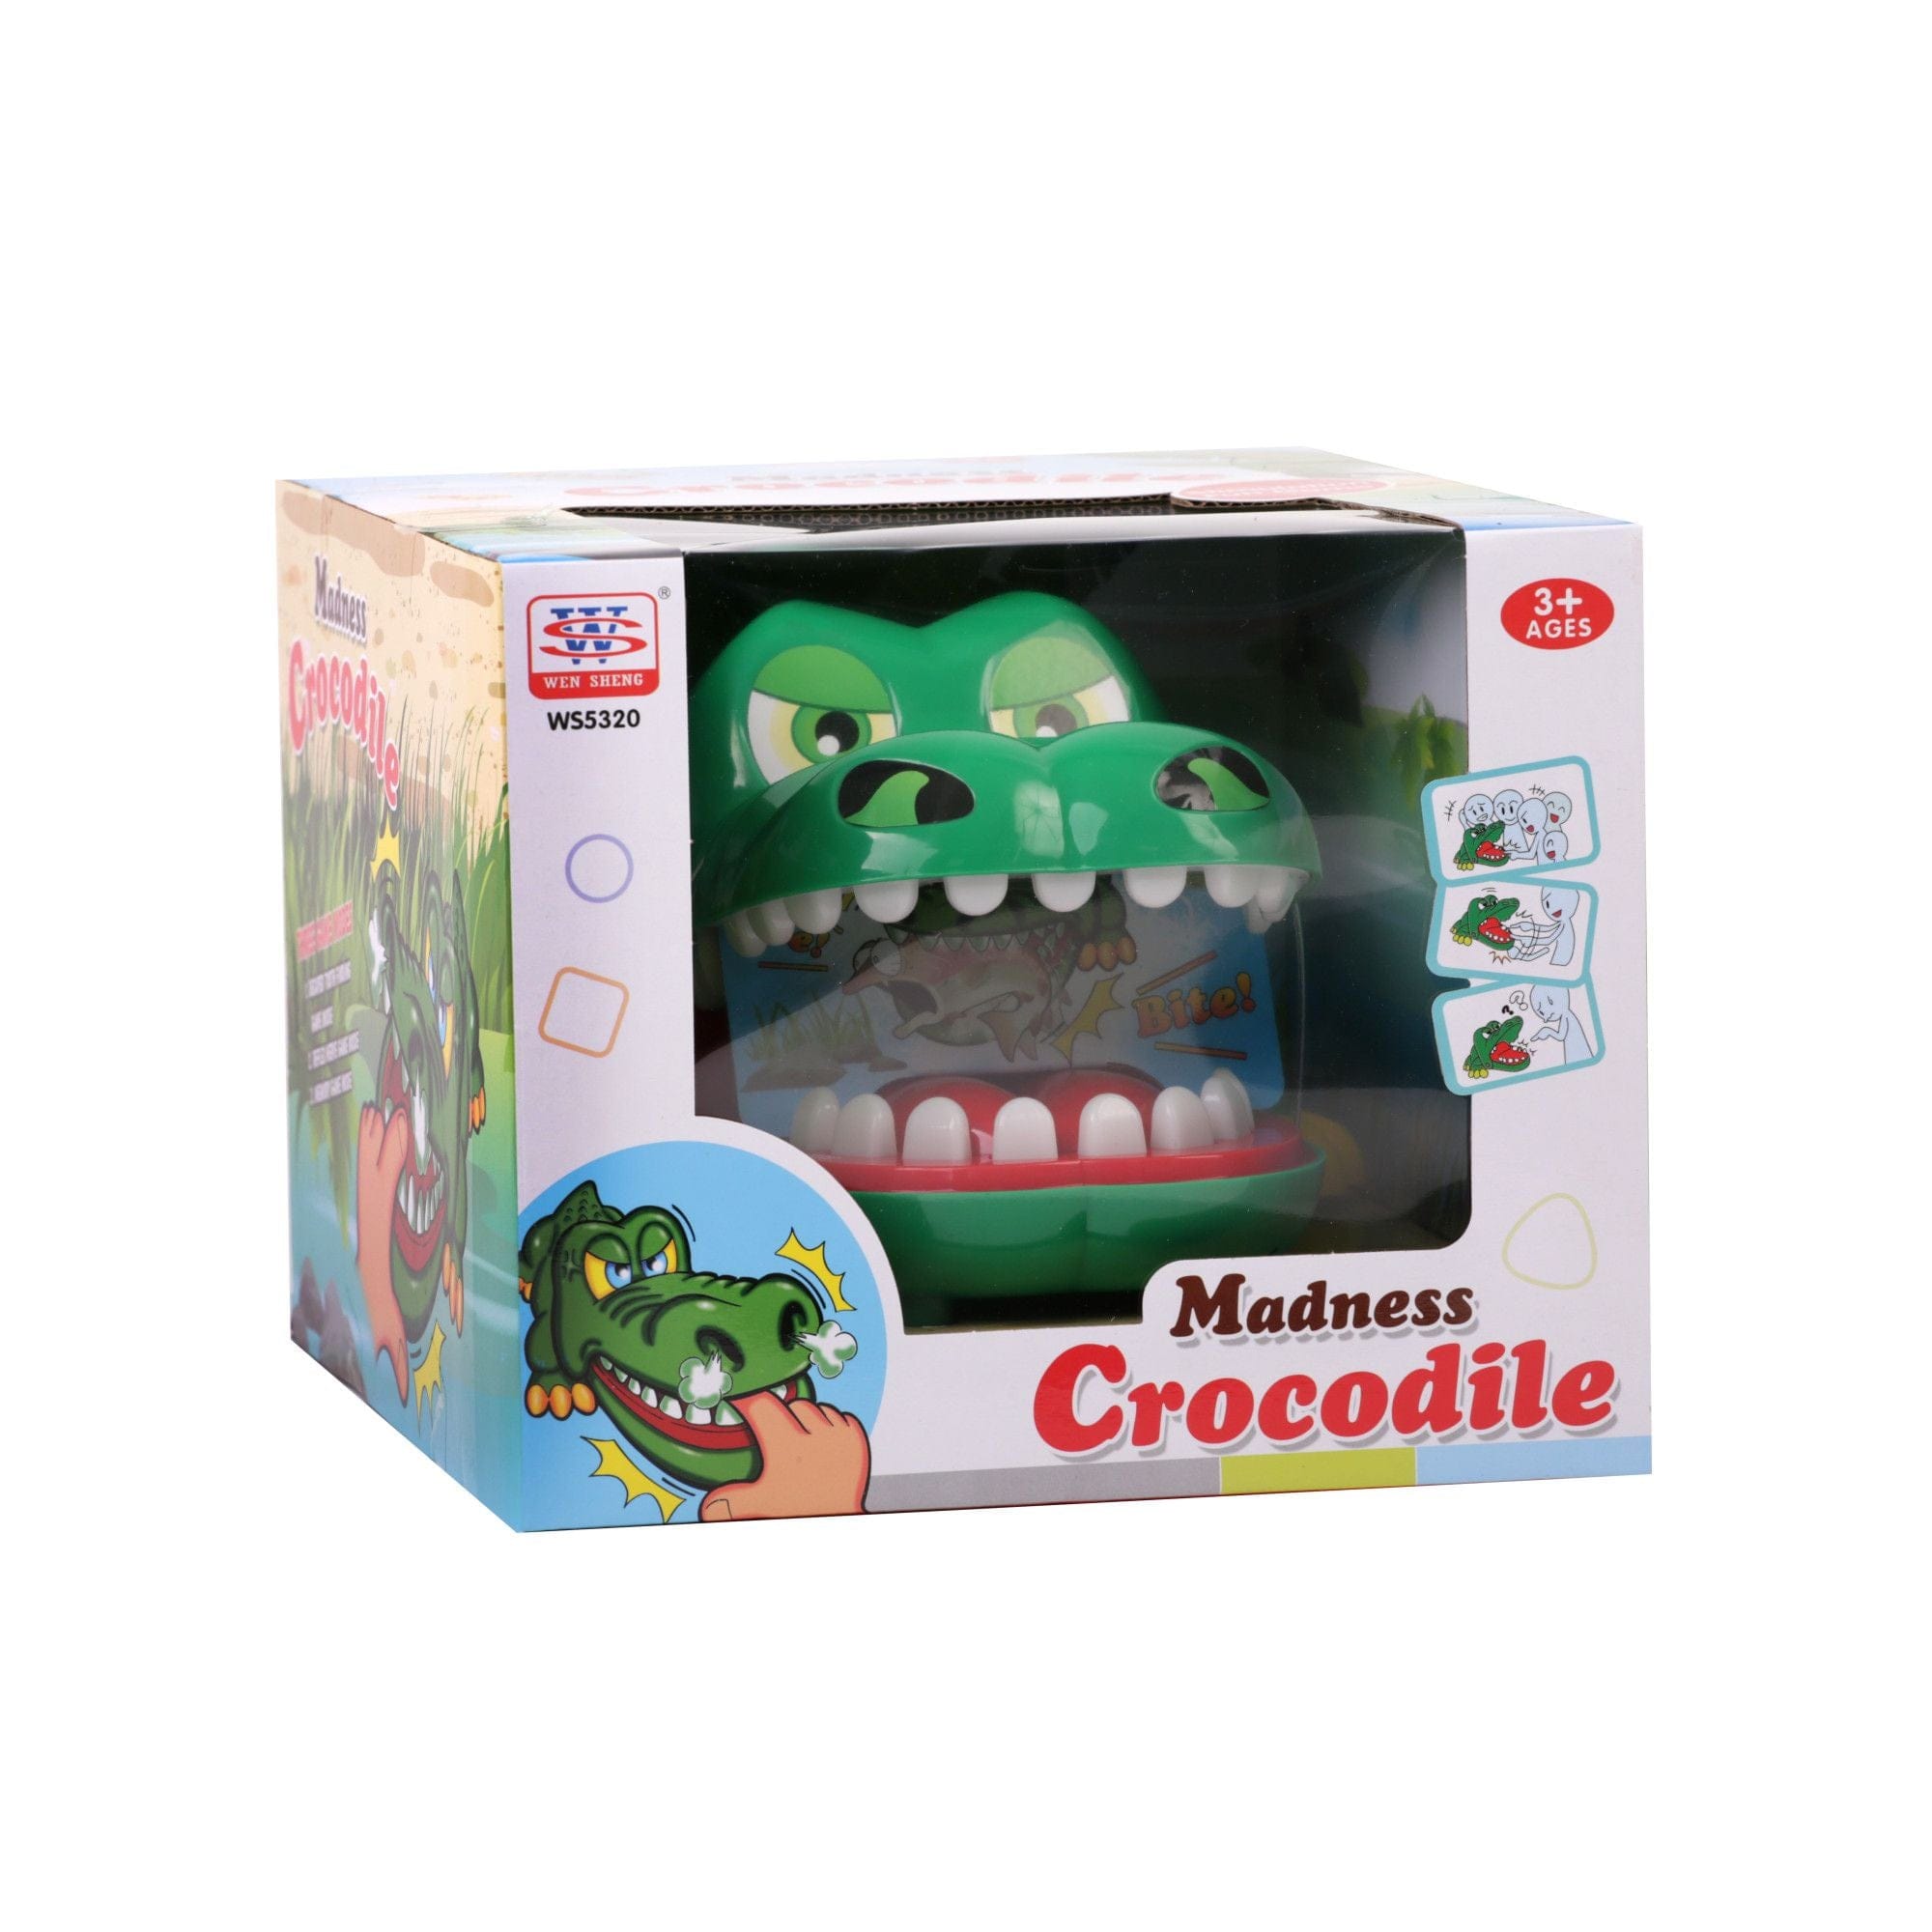 Crazy crocodile